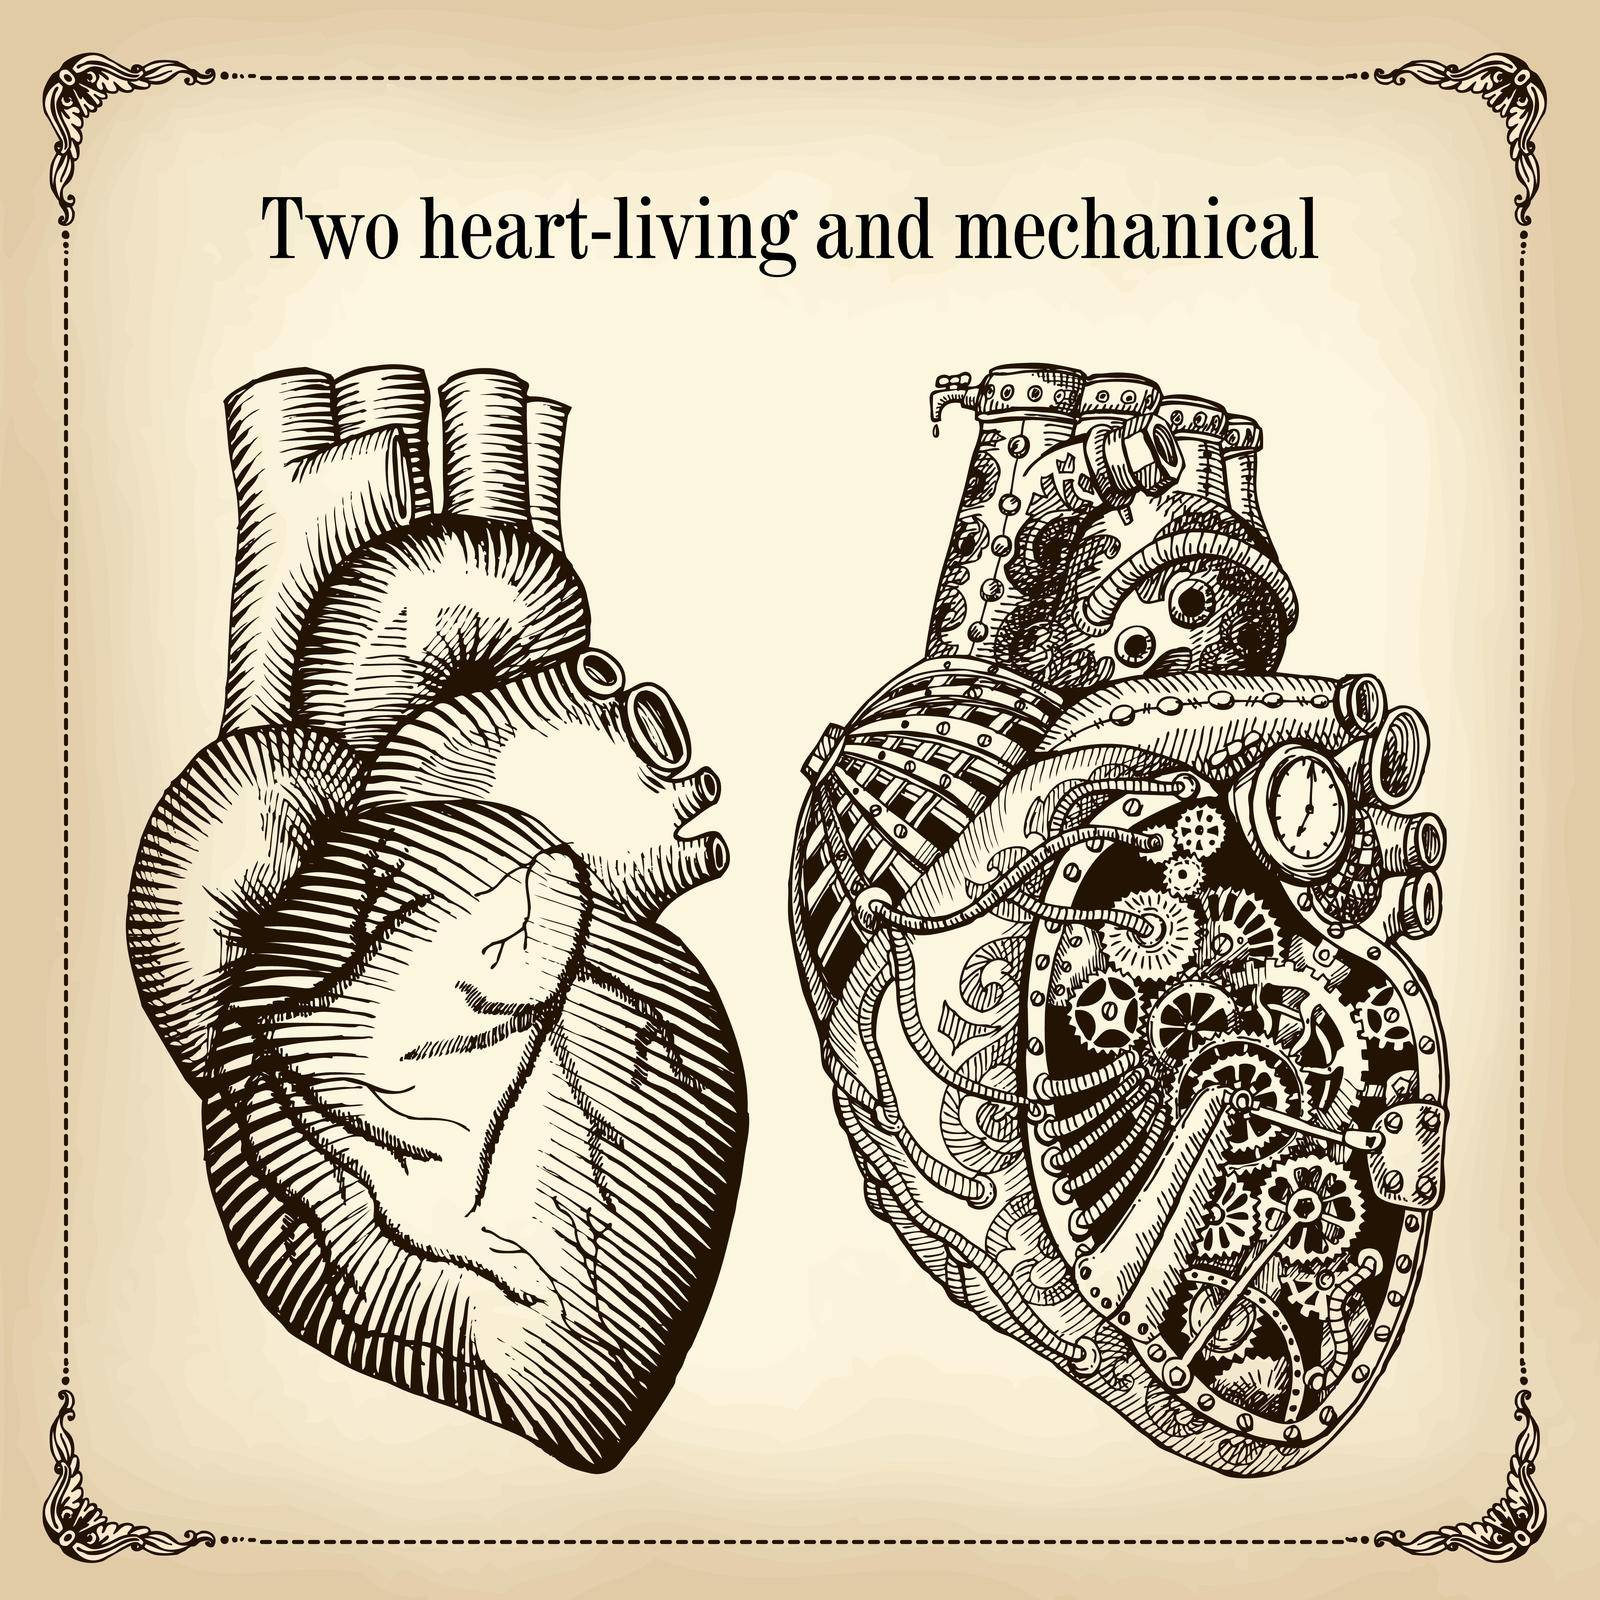 2 hearts-alive and mechanical by steshnikova